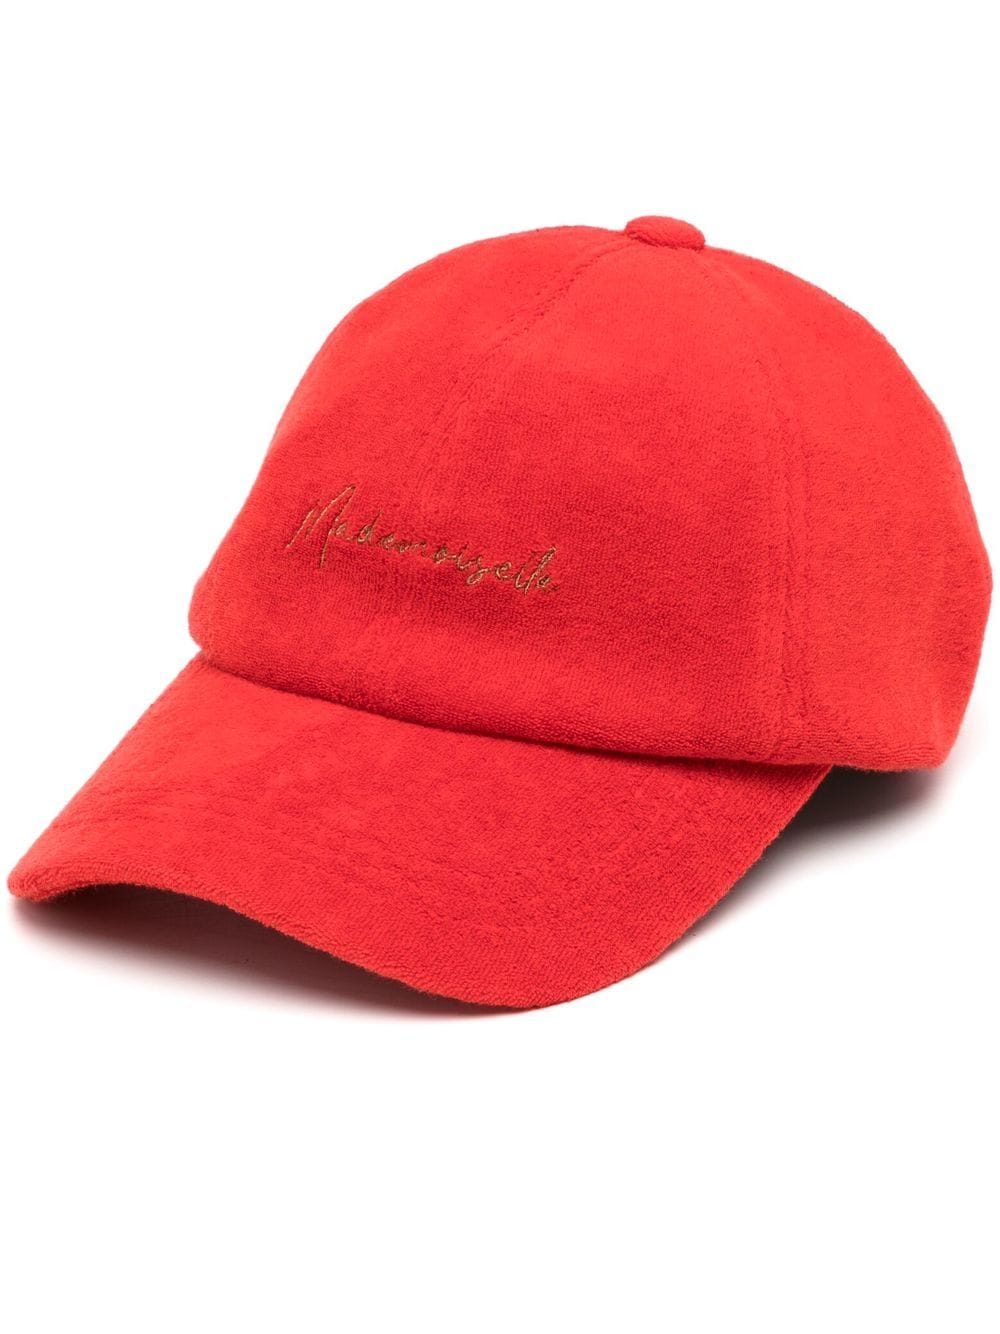 Mademoiselle terry-cloth cap